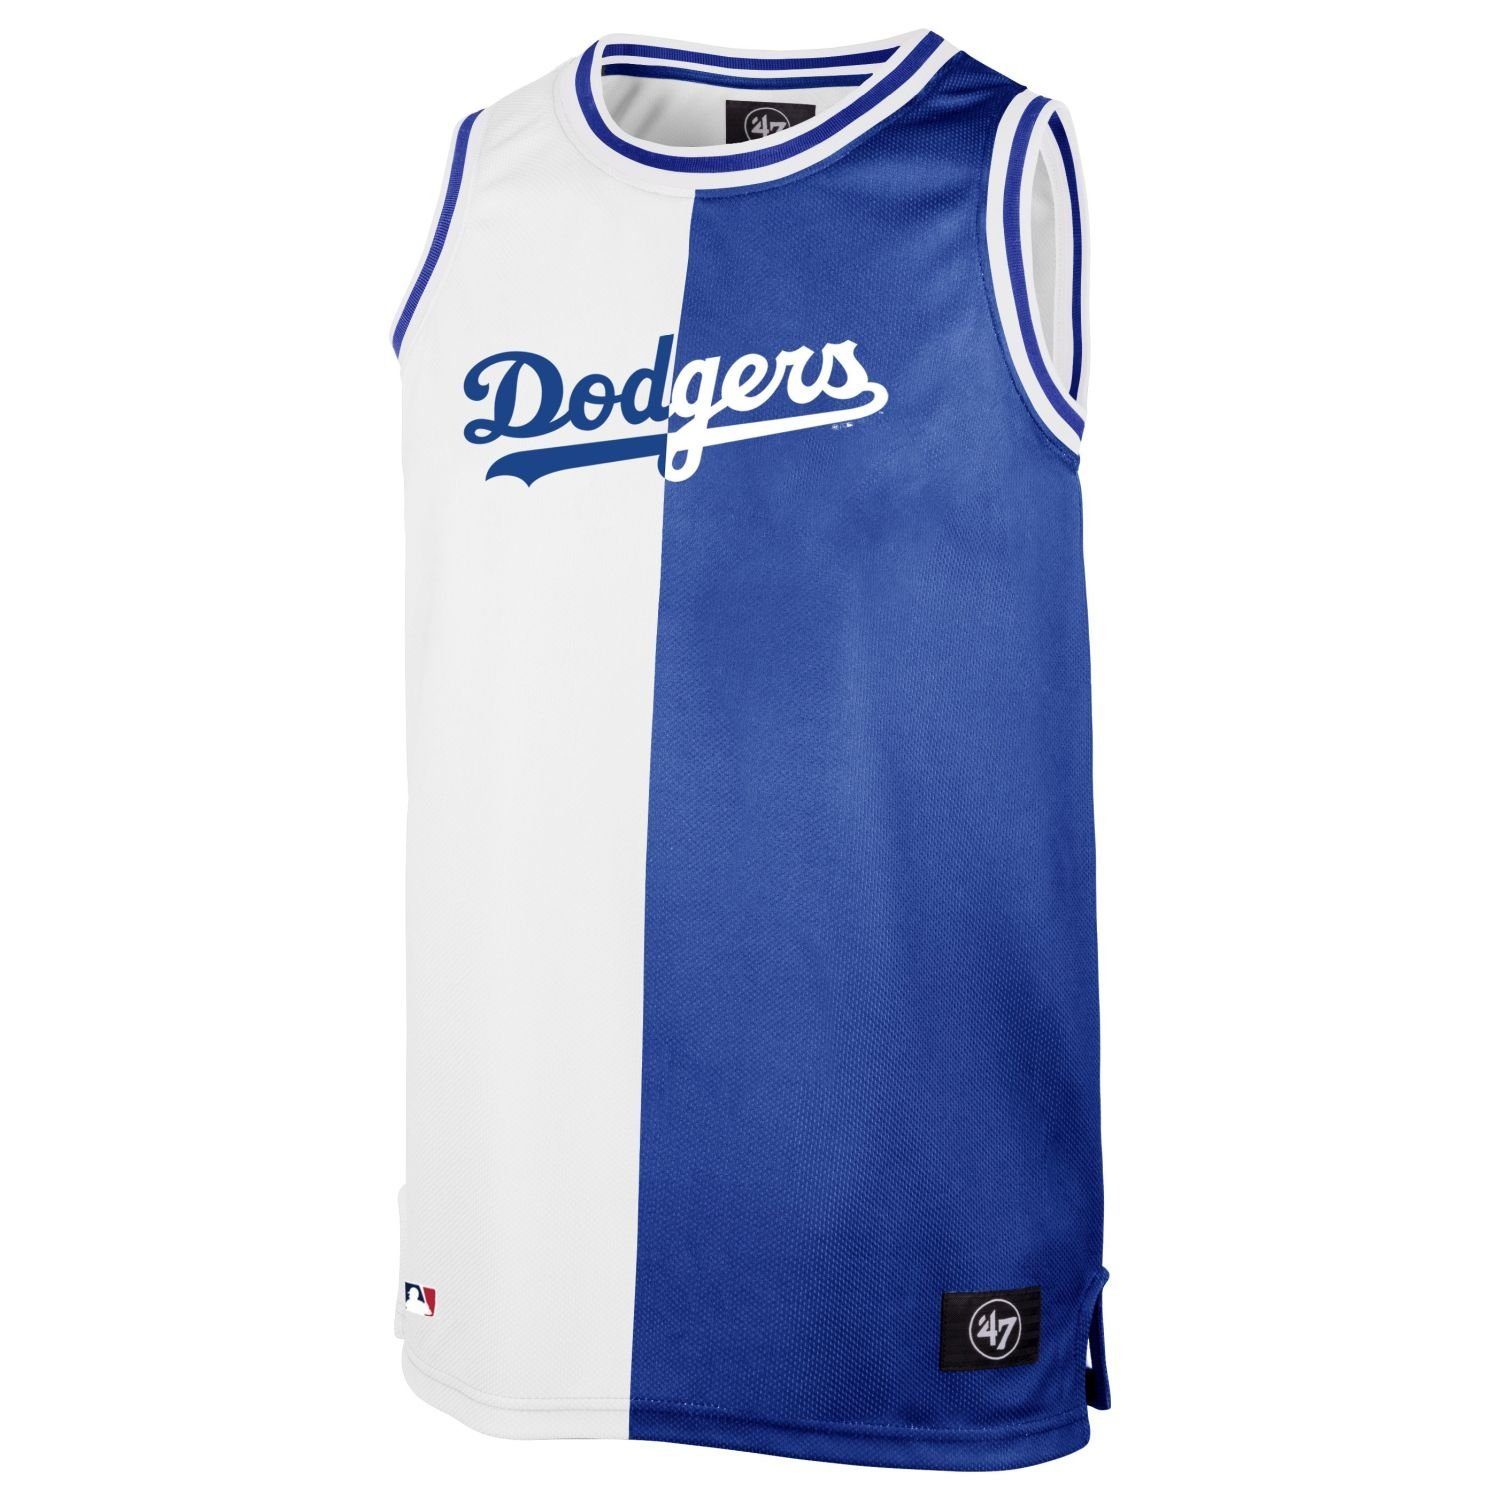 Angeles '47 Los Muskelshirt Dodgers SPLIT Brand